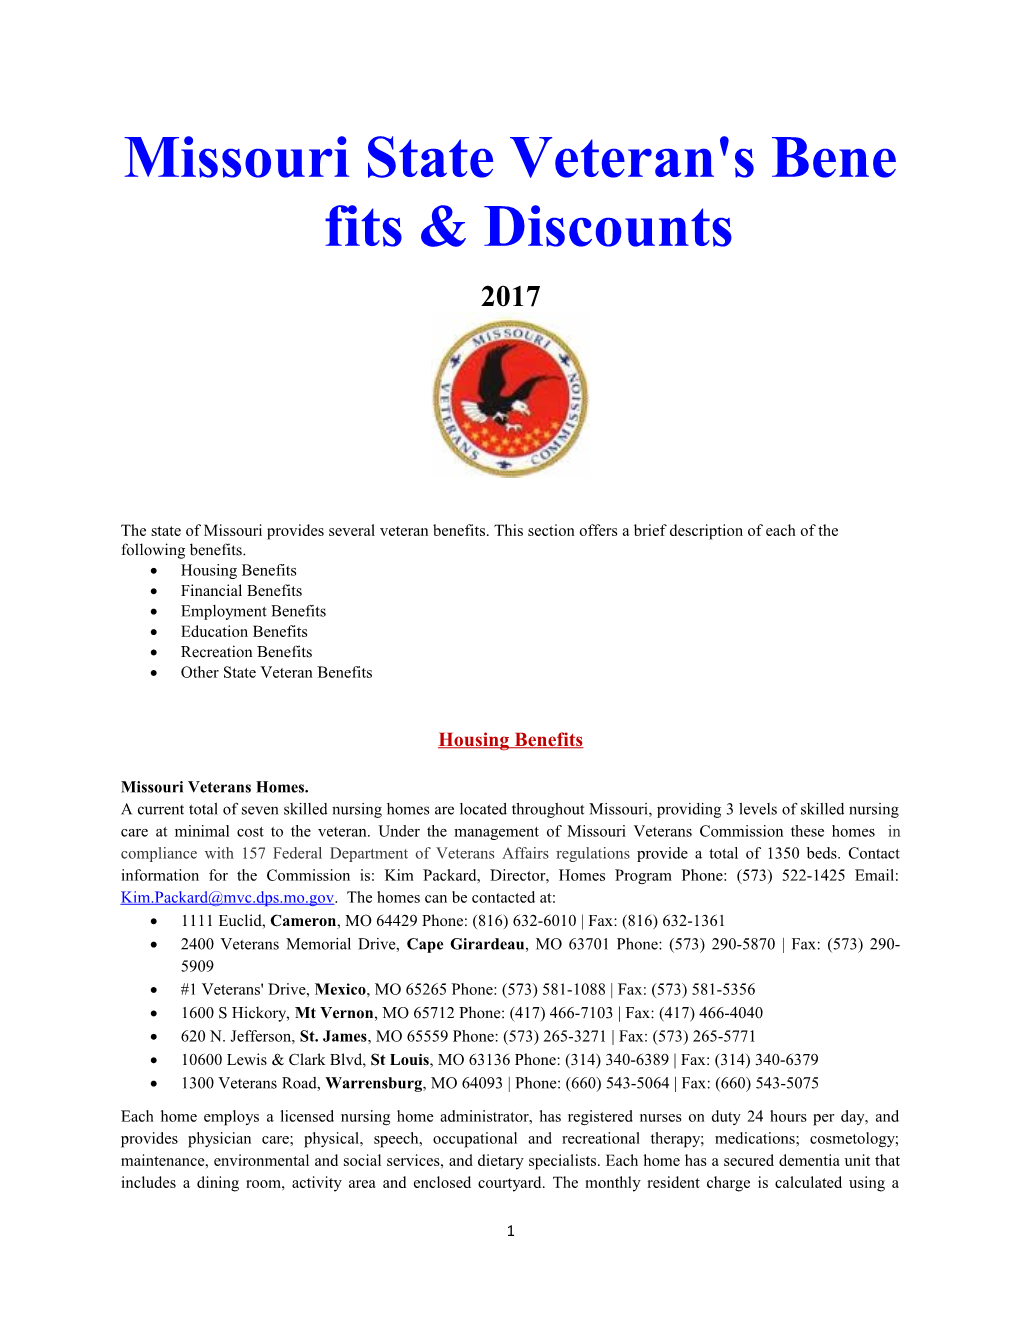 Missouri State Veteran's Benefits & Discounts s1